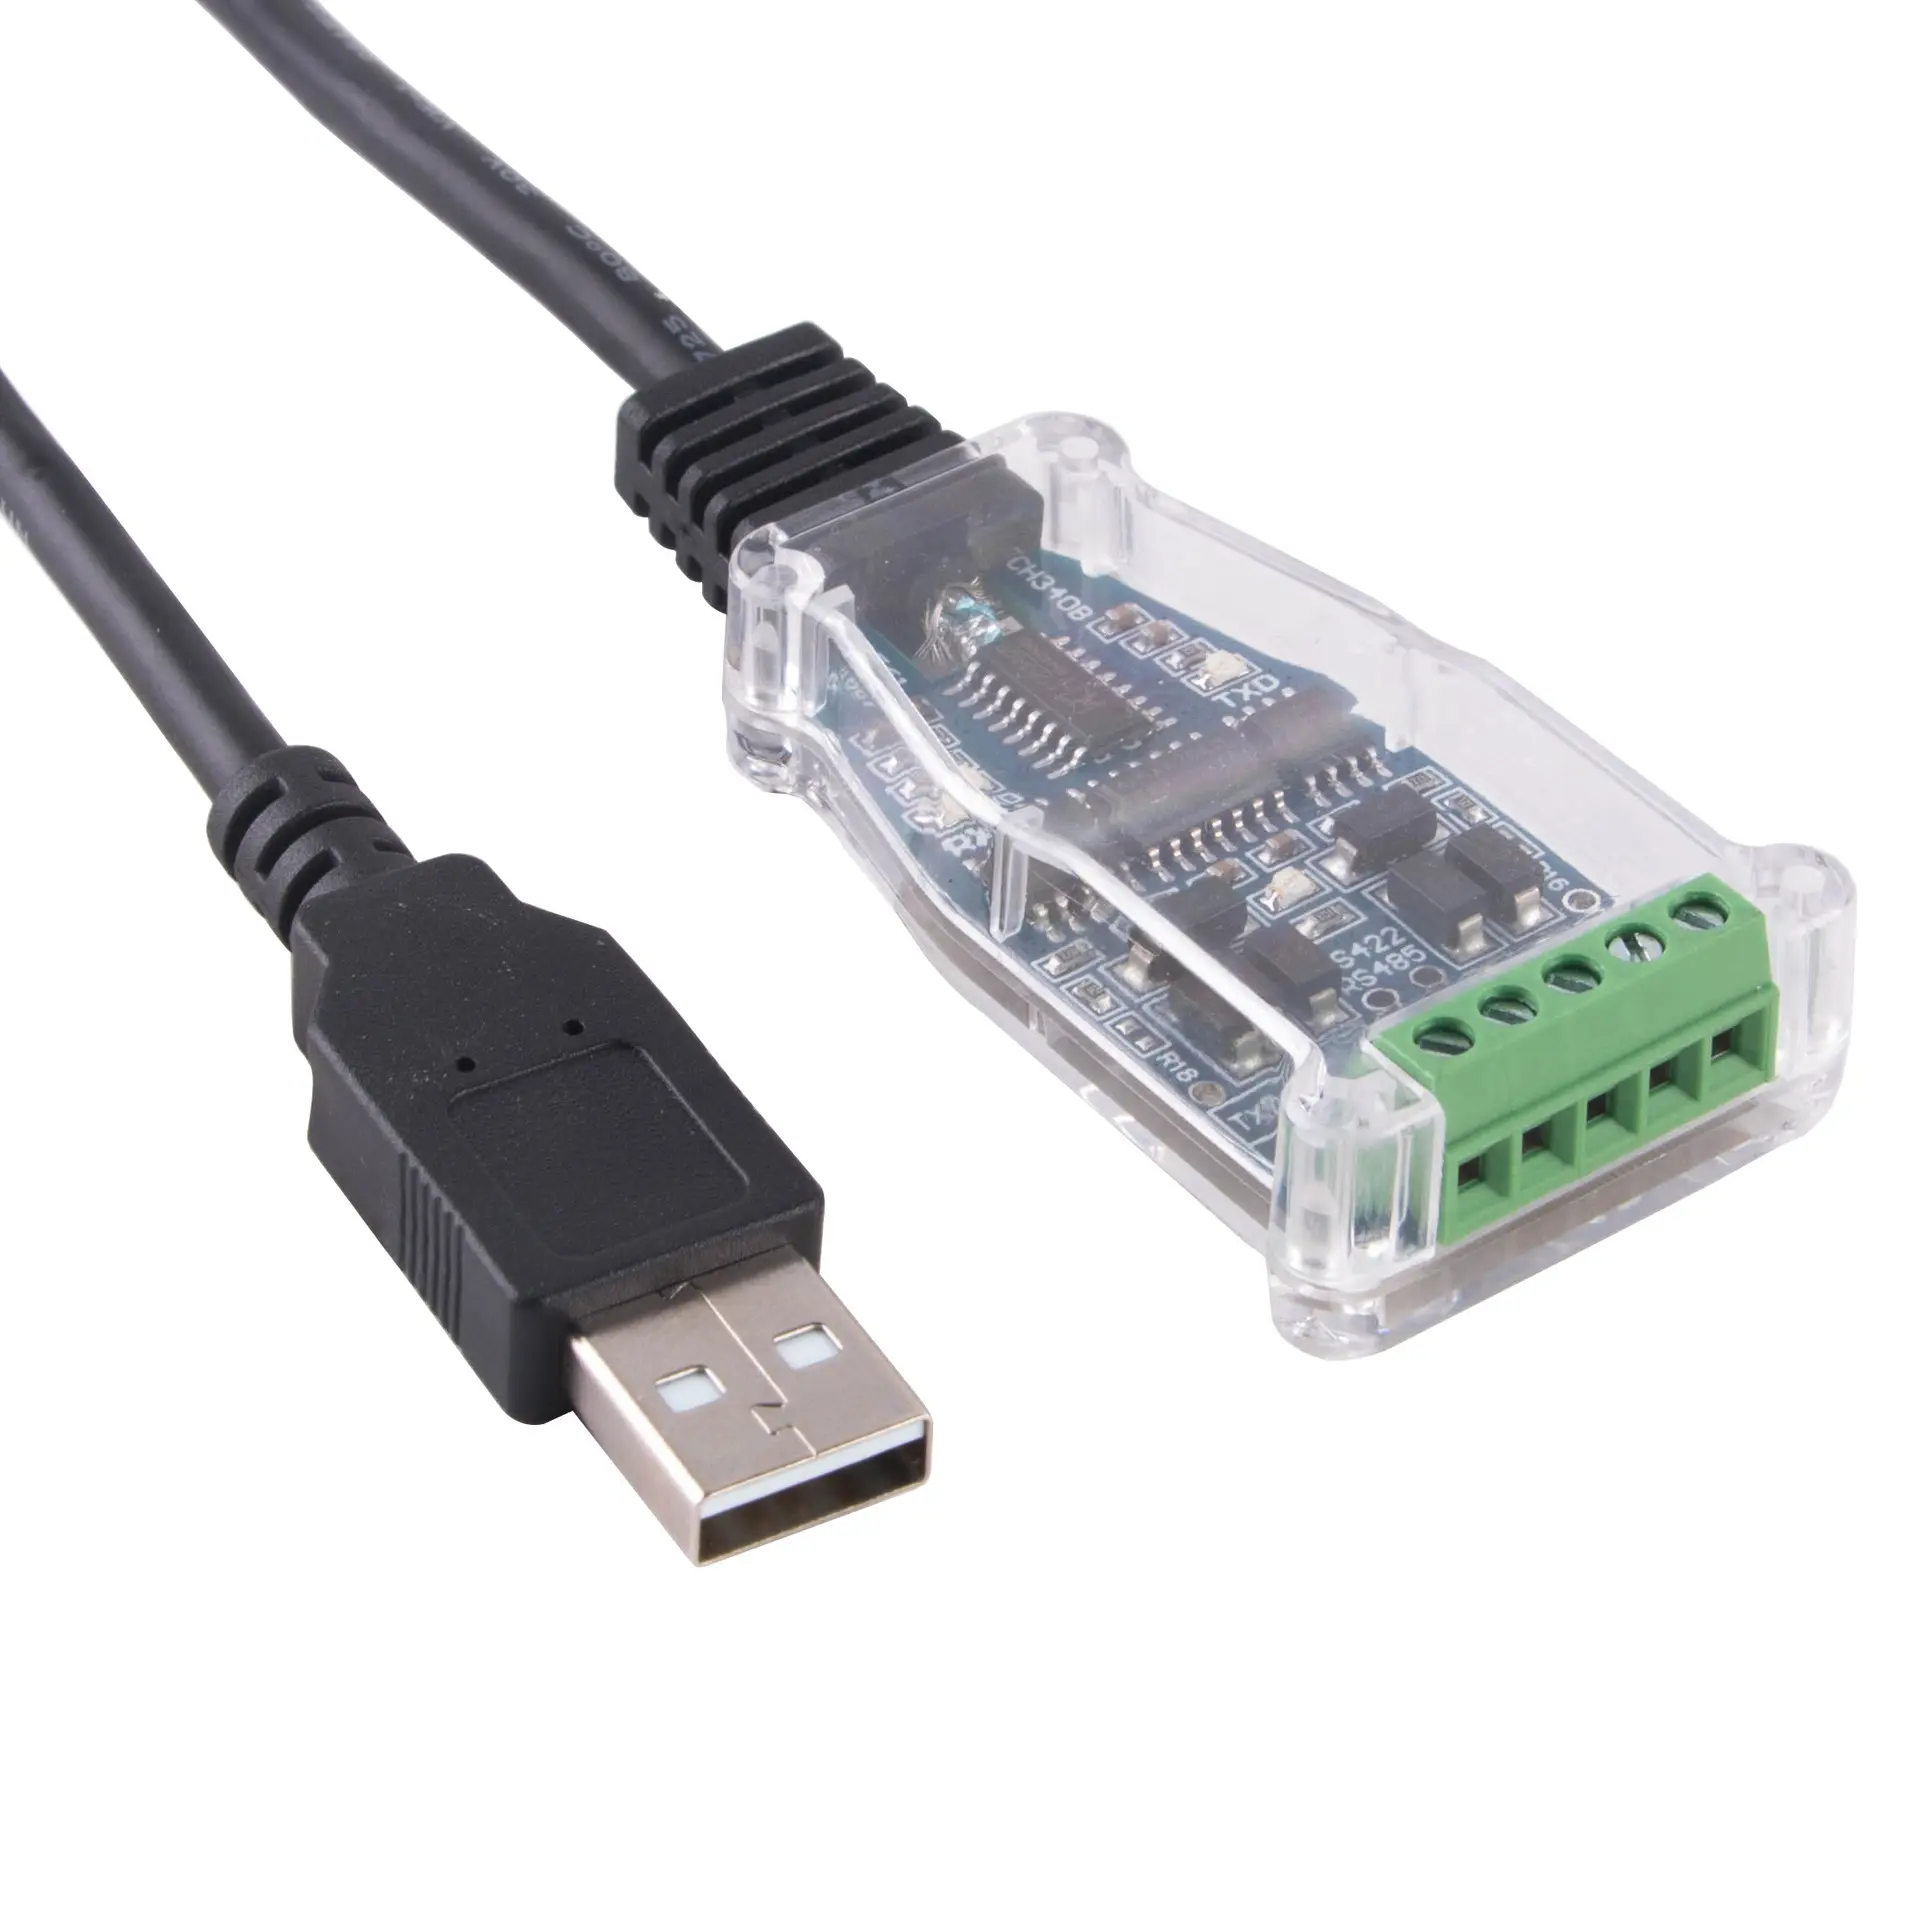 Kabel Adaptor Konverter Port Serial USB Ke RS422 RS485 dengan Chipset CH340